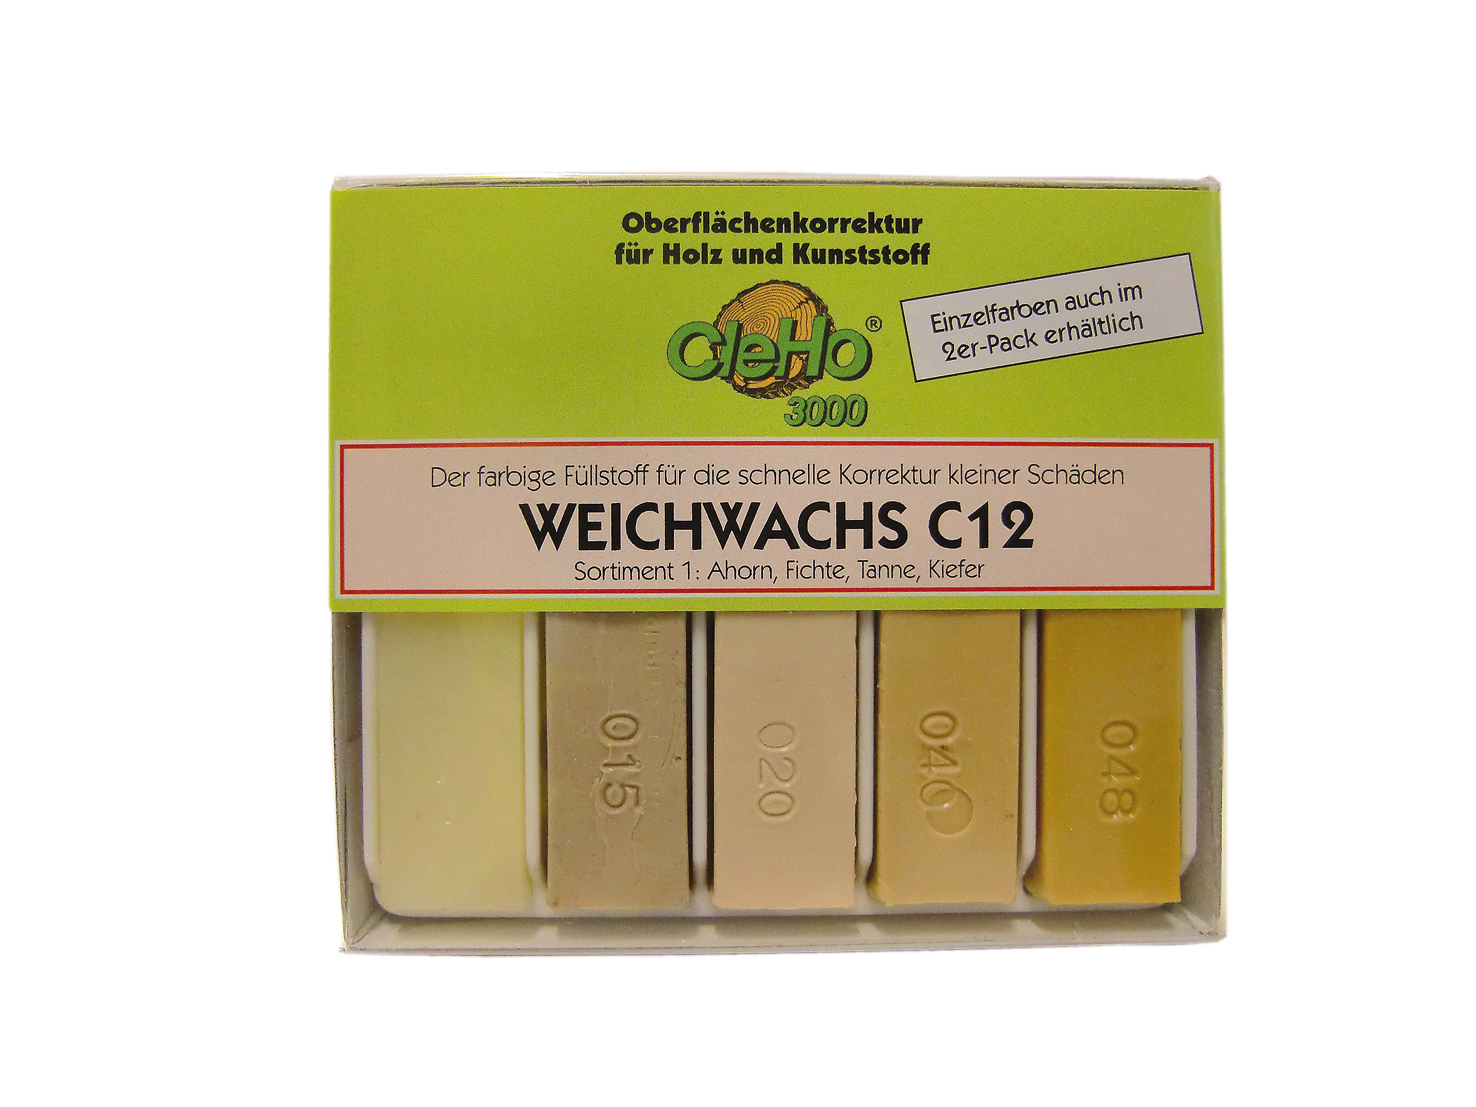 CleHo Weichwachs C 12 Sortiment 1